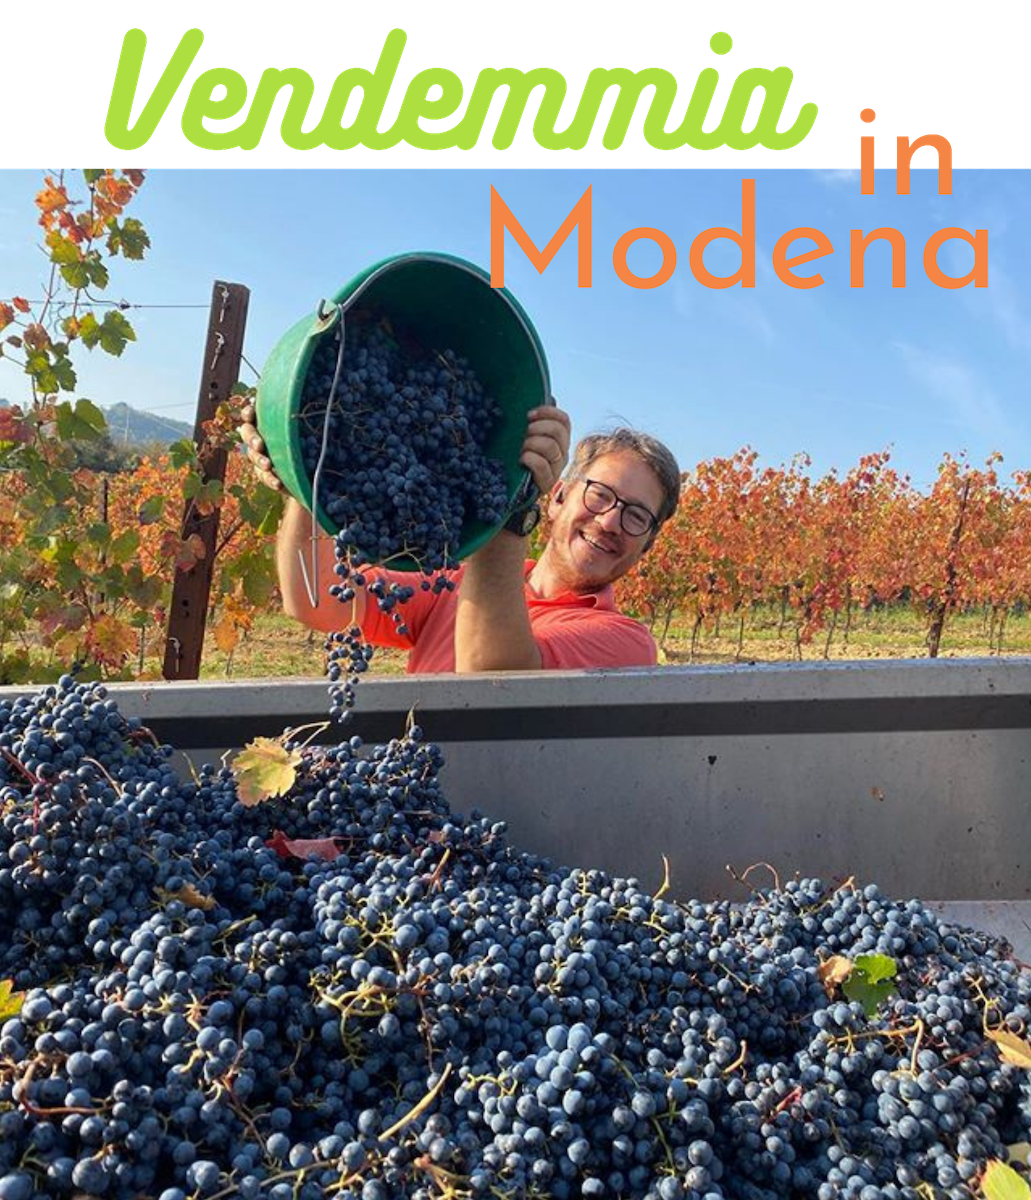 Modena grape harvest vendemmia traditional balsamic vinegar